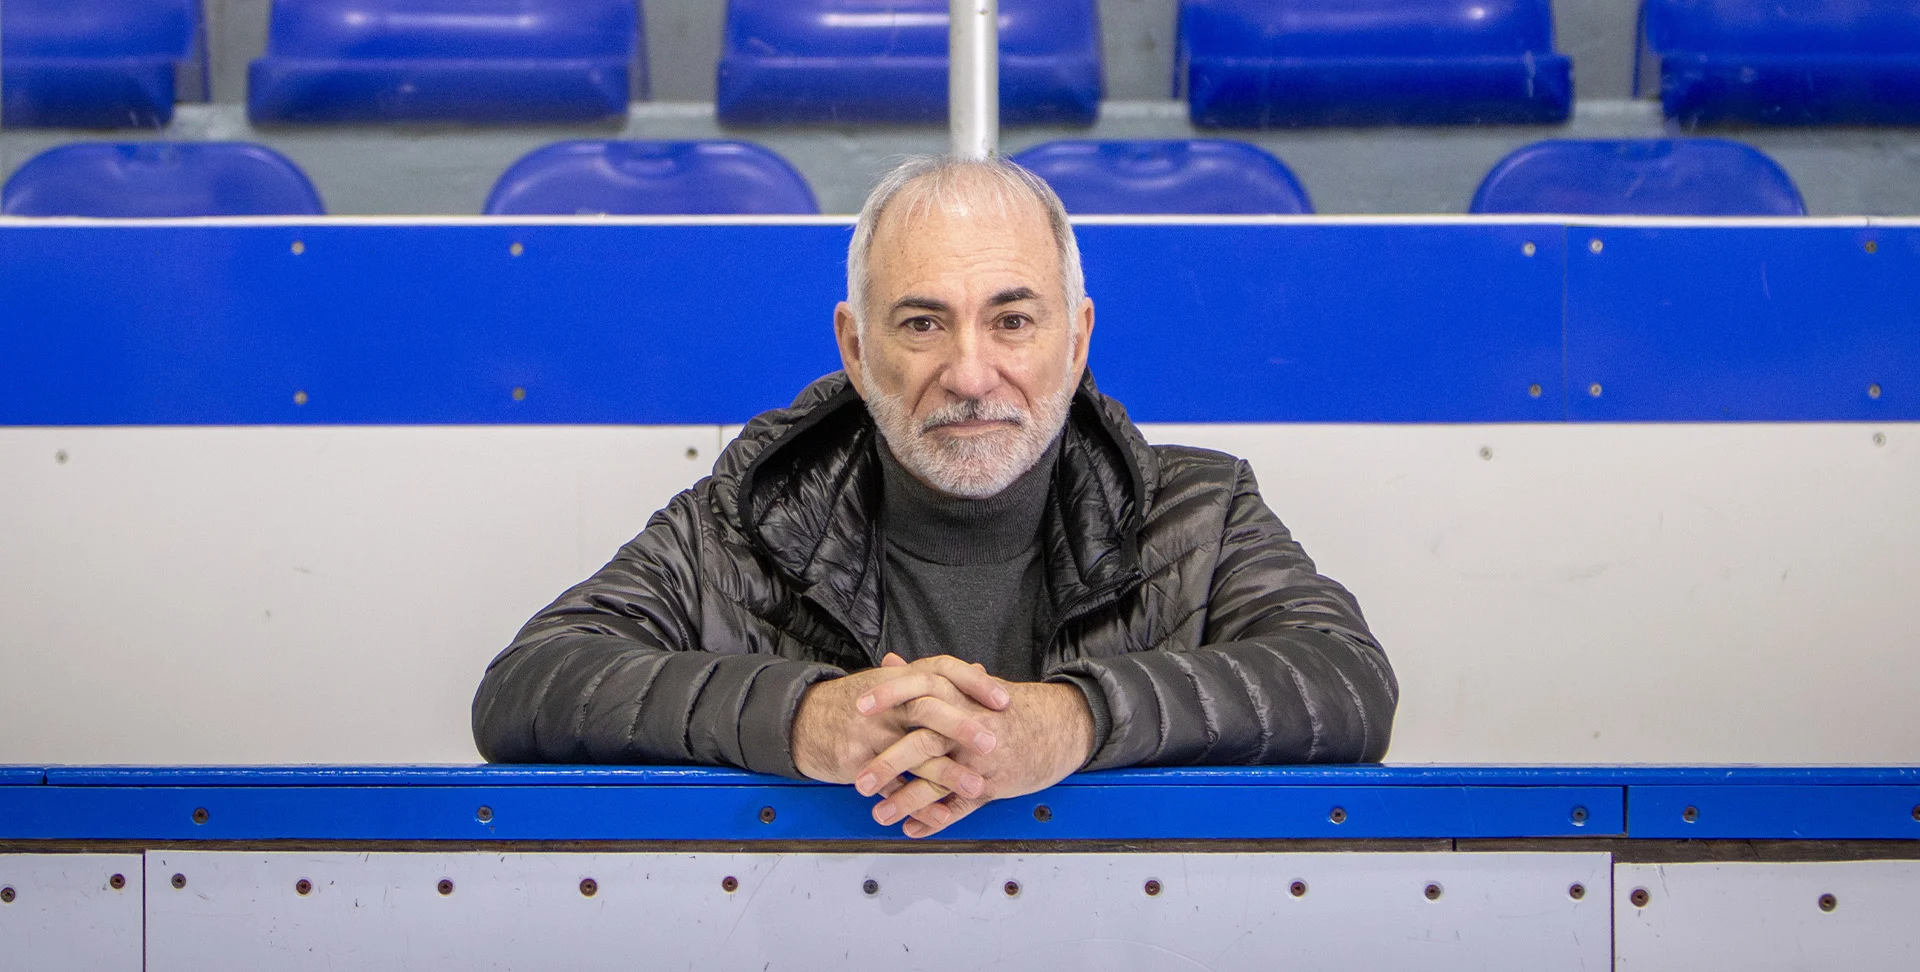 Cardiac arrest survivor Robert Marien leans on a hockey arena bench